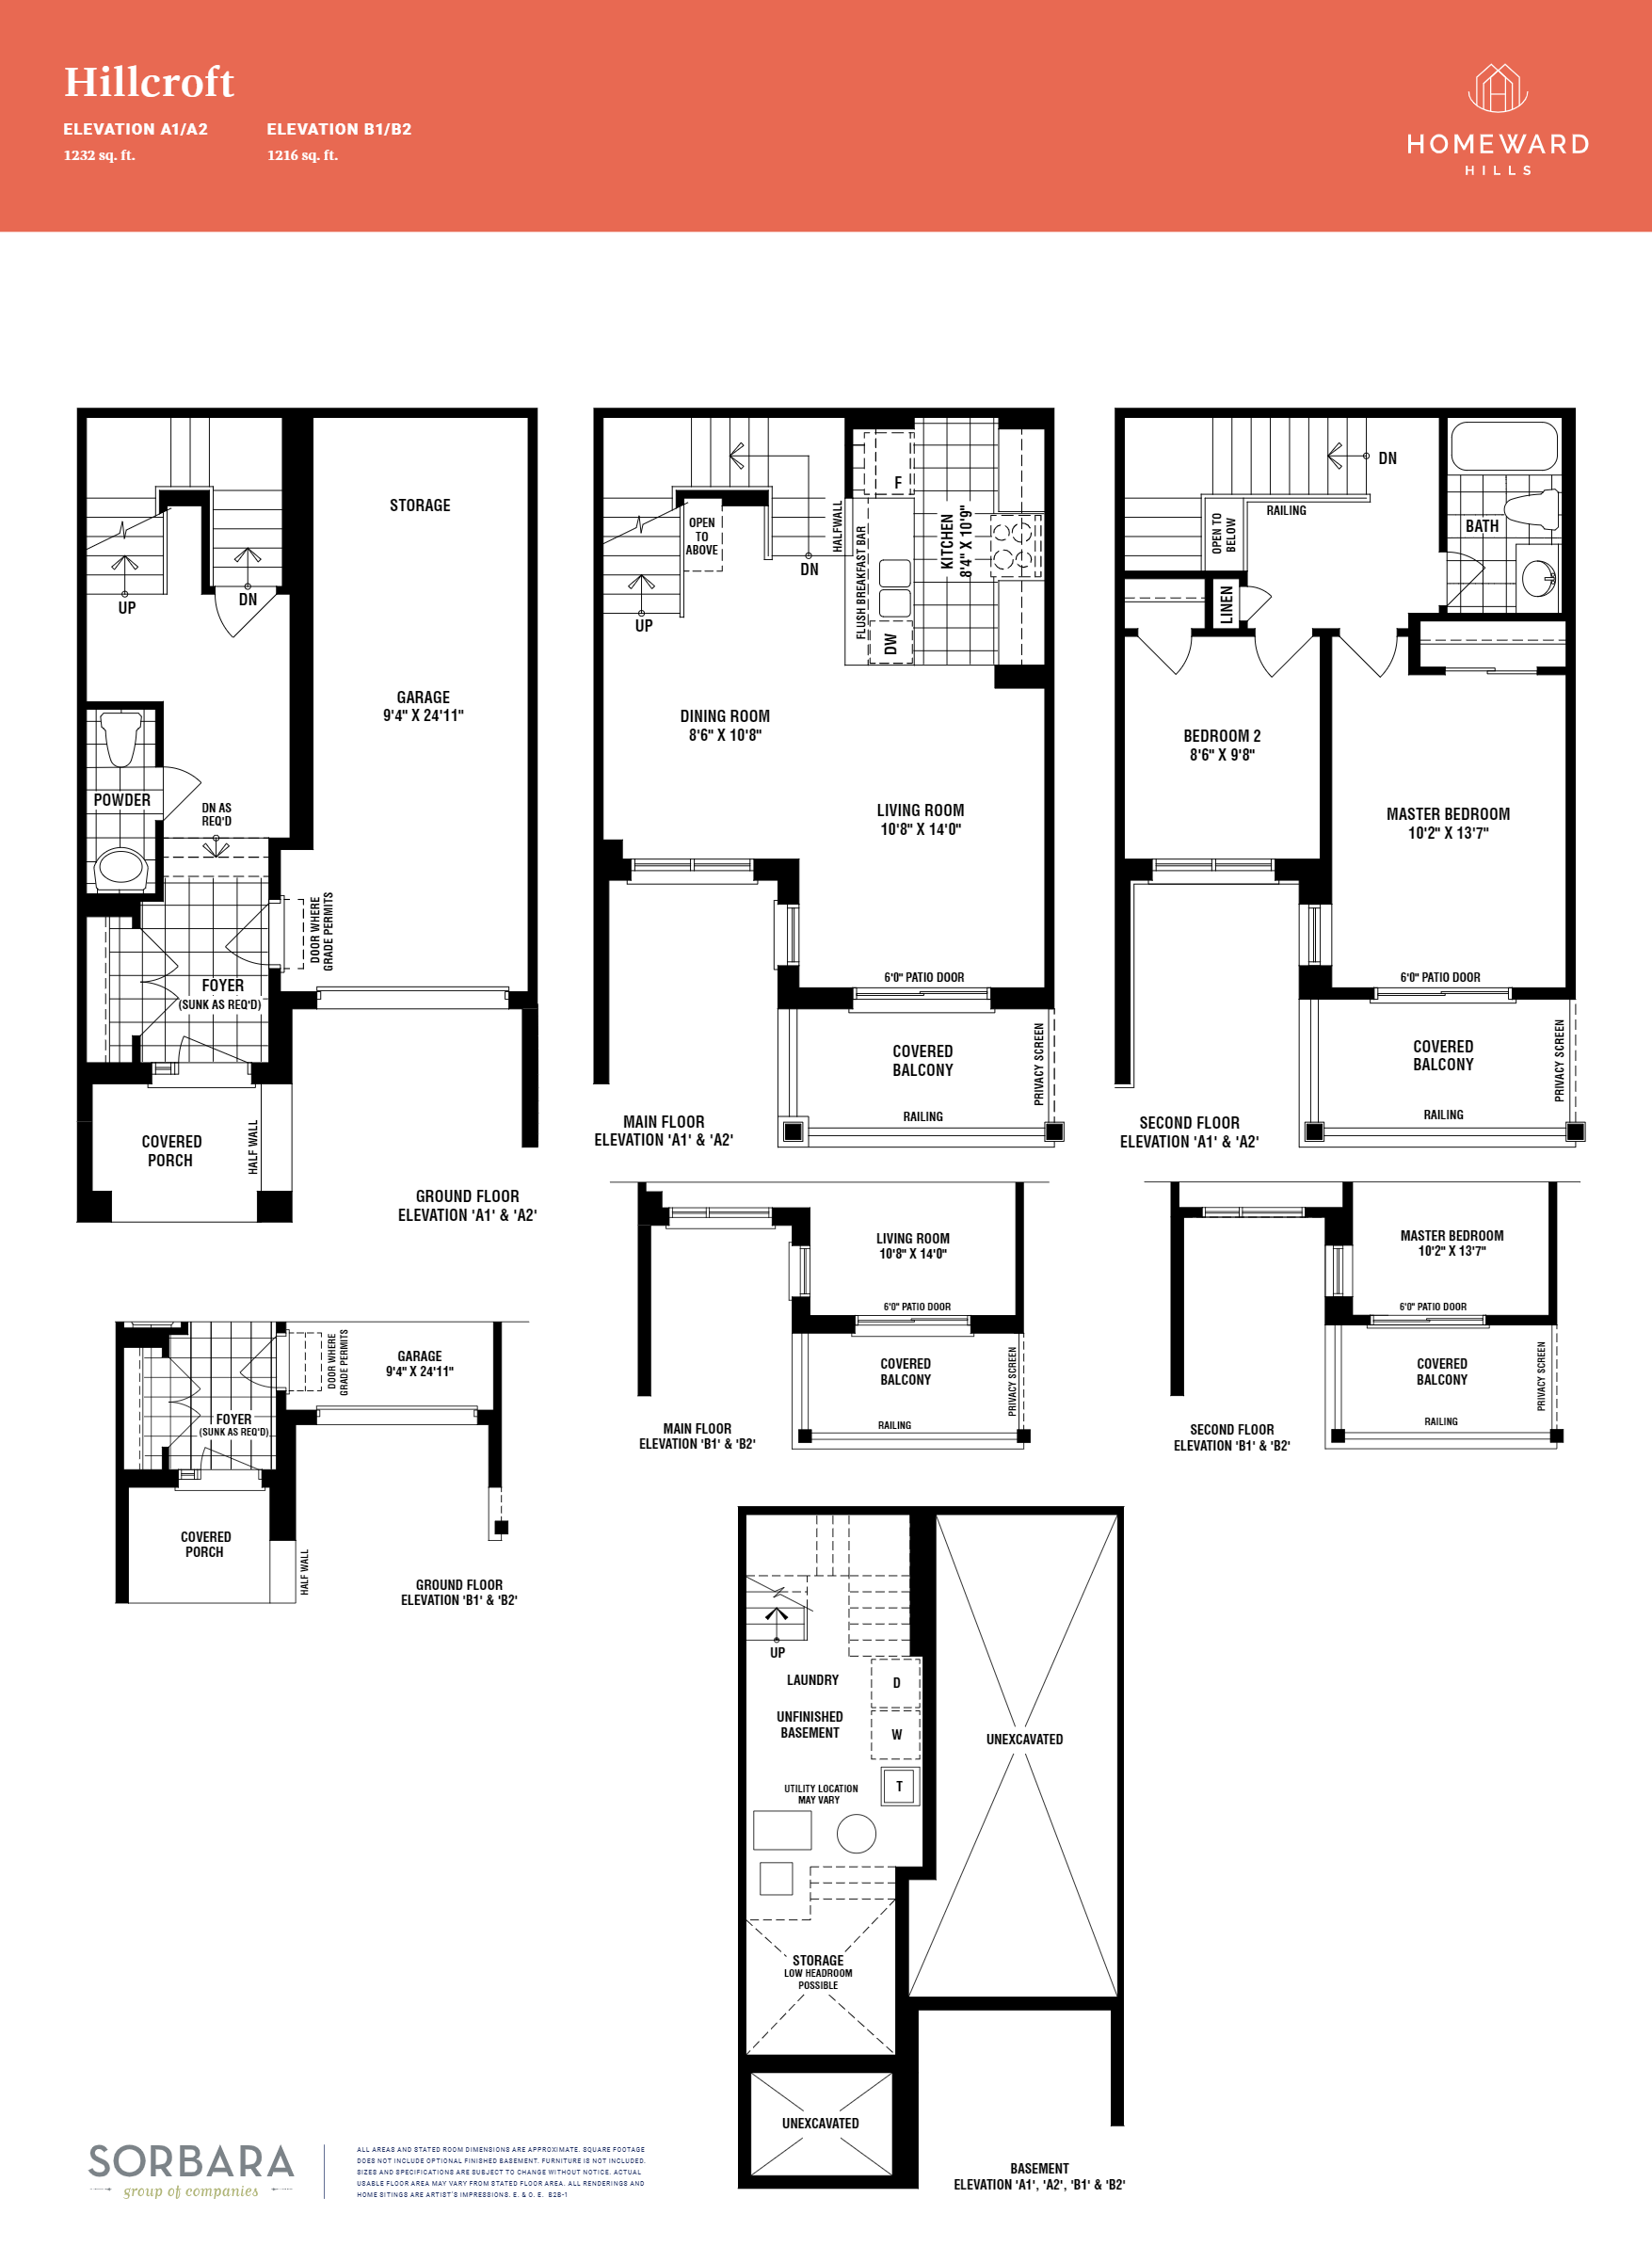  Floor Plan of Homeward Hills with undefined beds